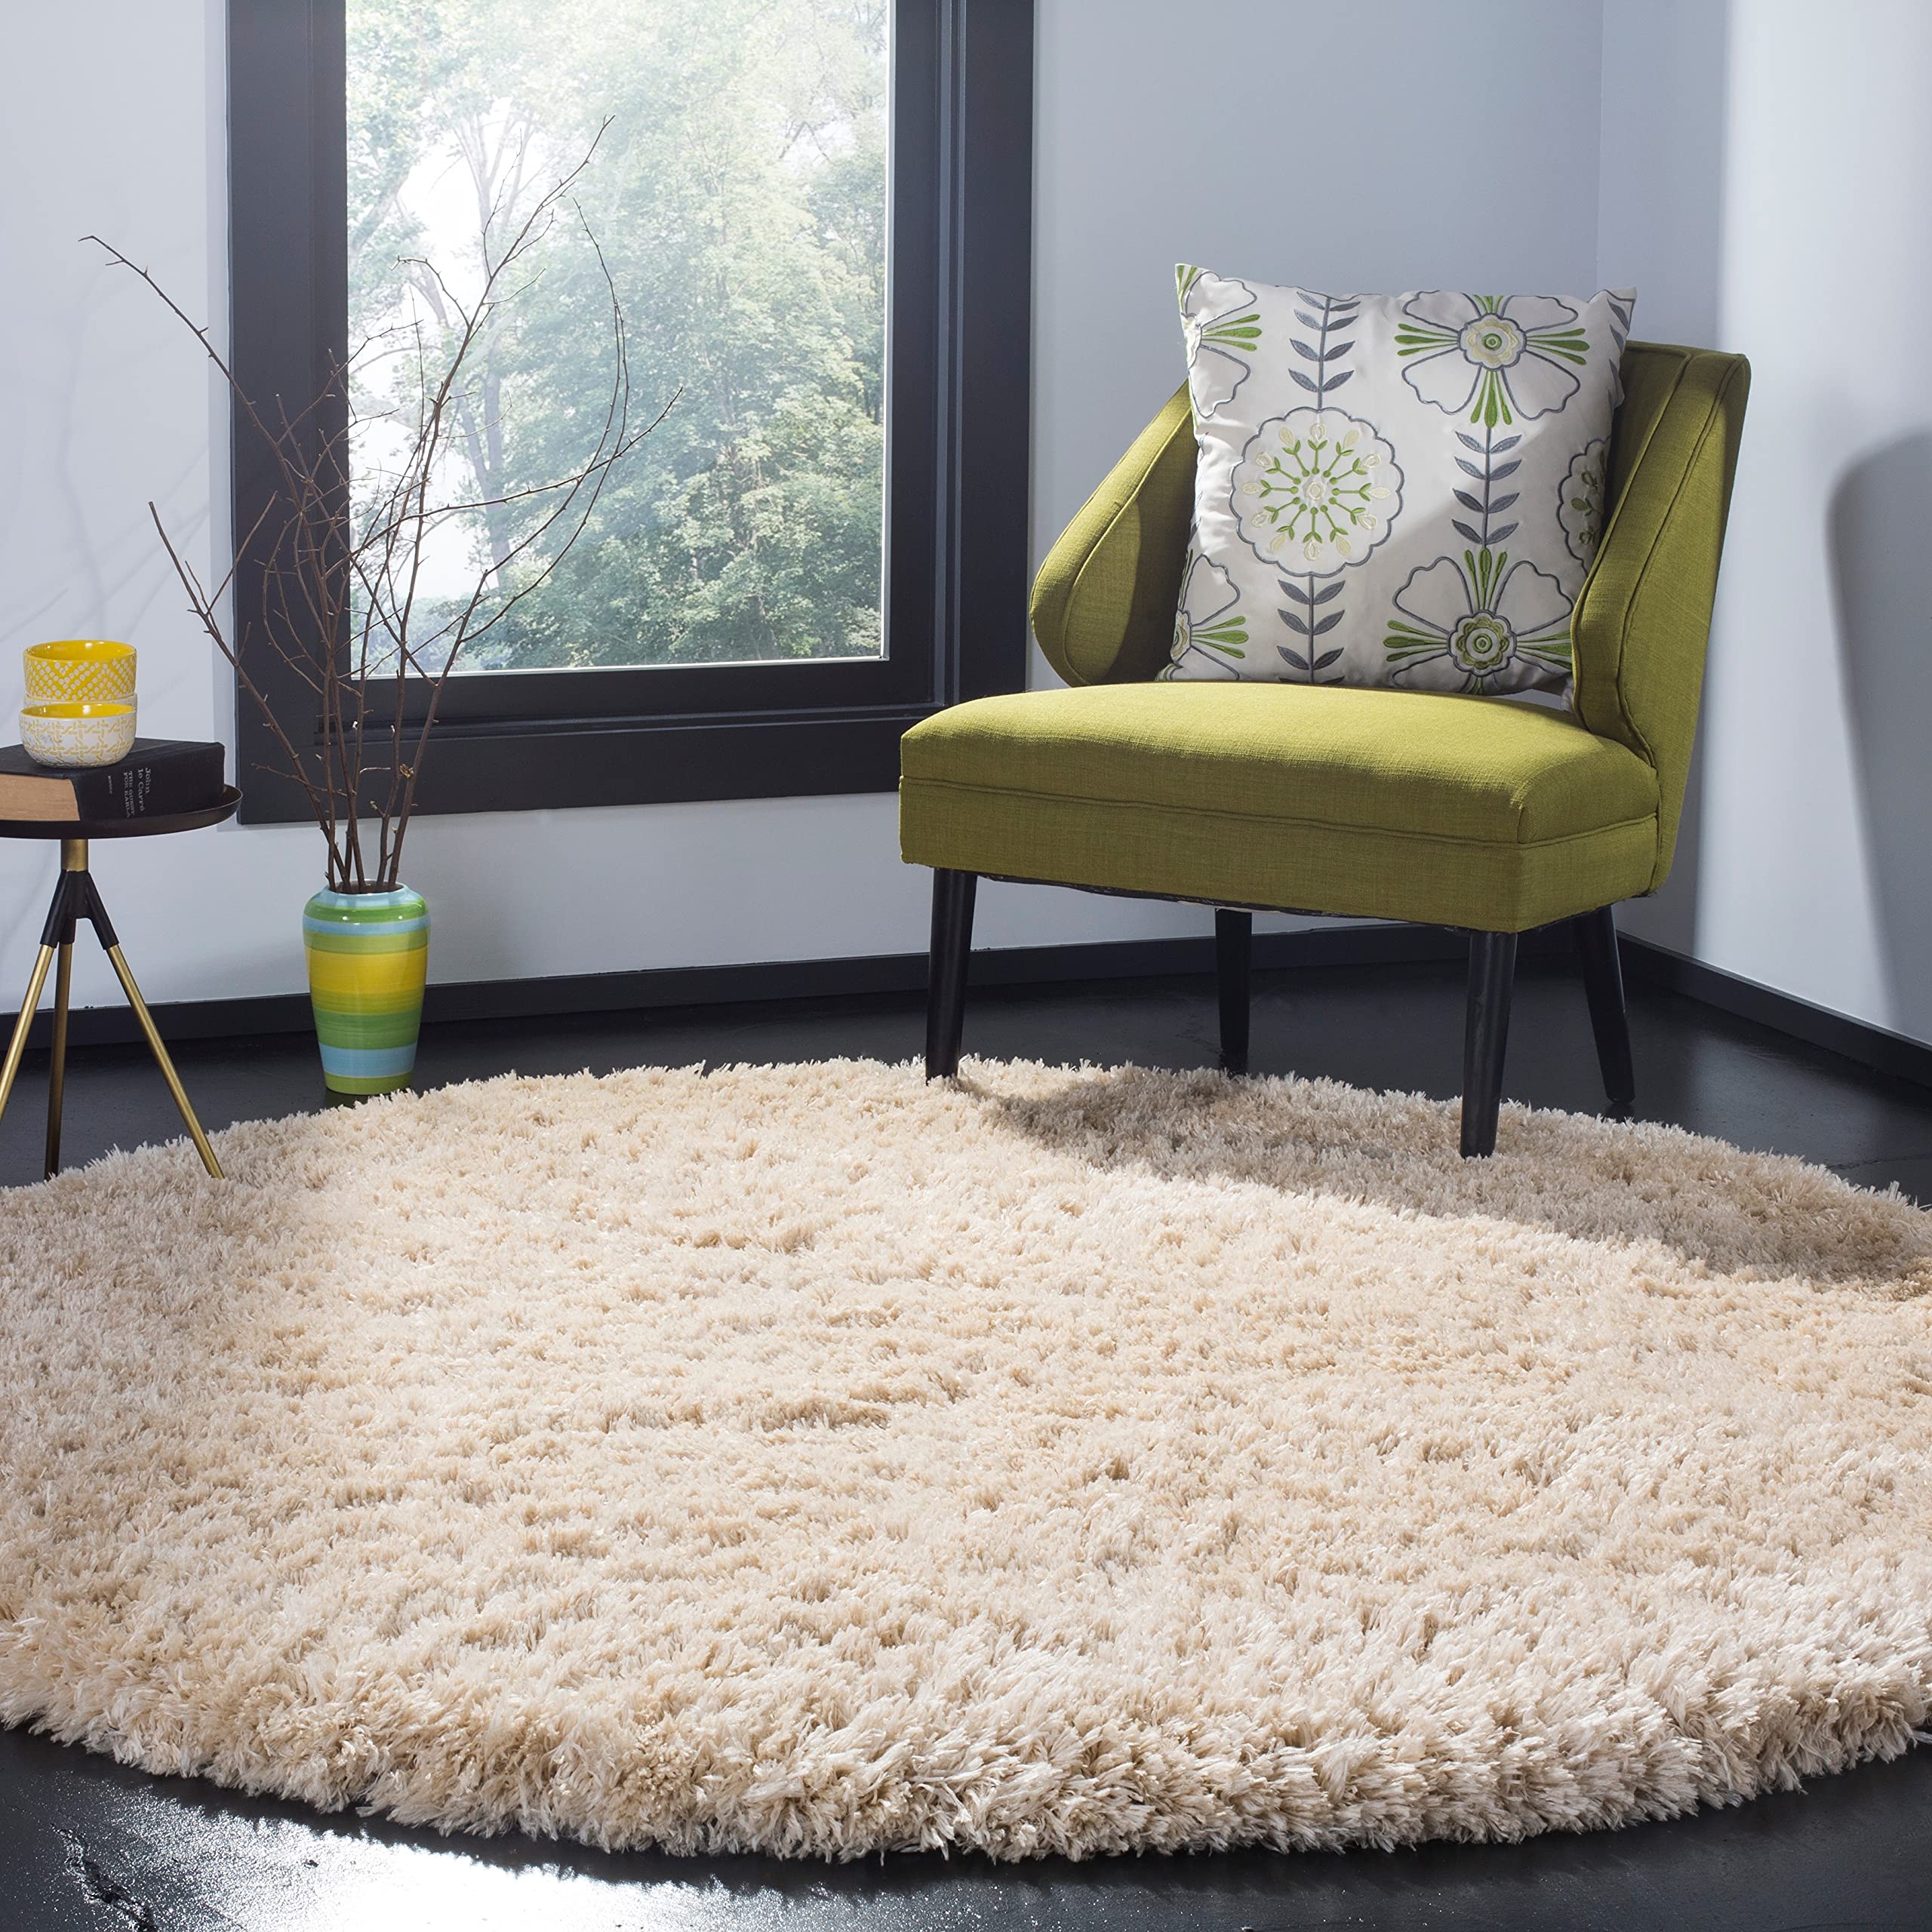 Safavieh Polar Shag 系列小地毯 - 4 英寸圆形，浅米色，纯色迷人设计，不脱落且易于护理，3 英寸厚，非常适合客厅、卧室中人流较多的区域 (PSG800A)